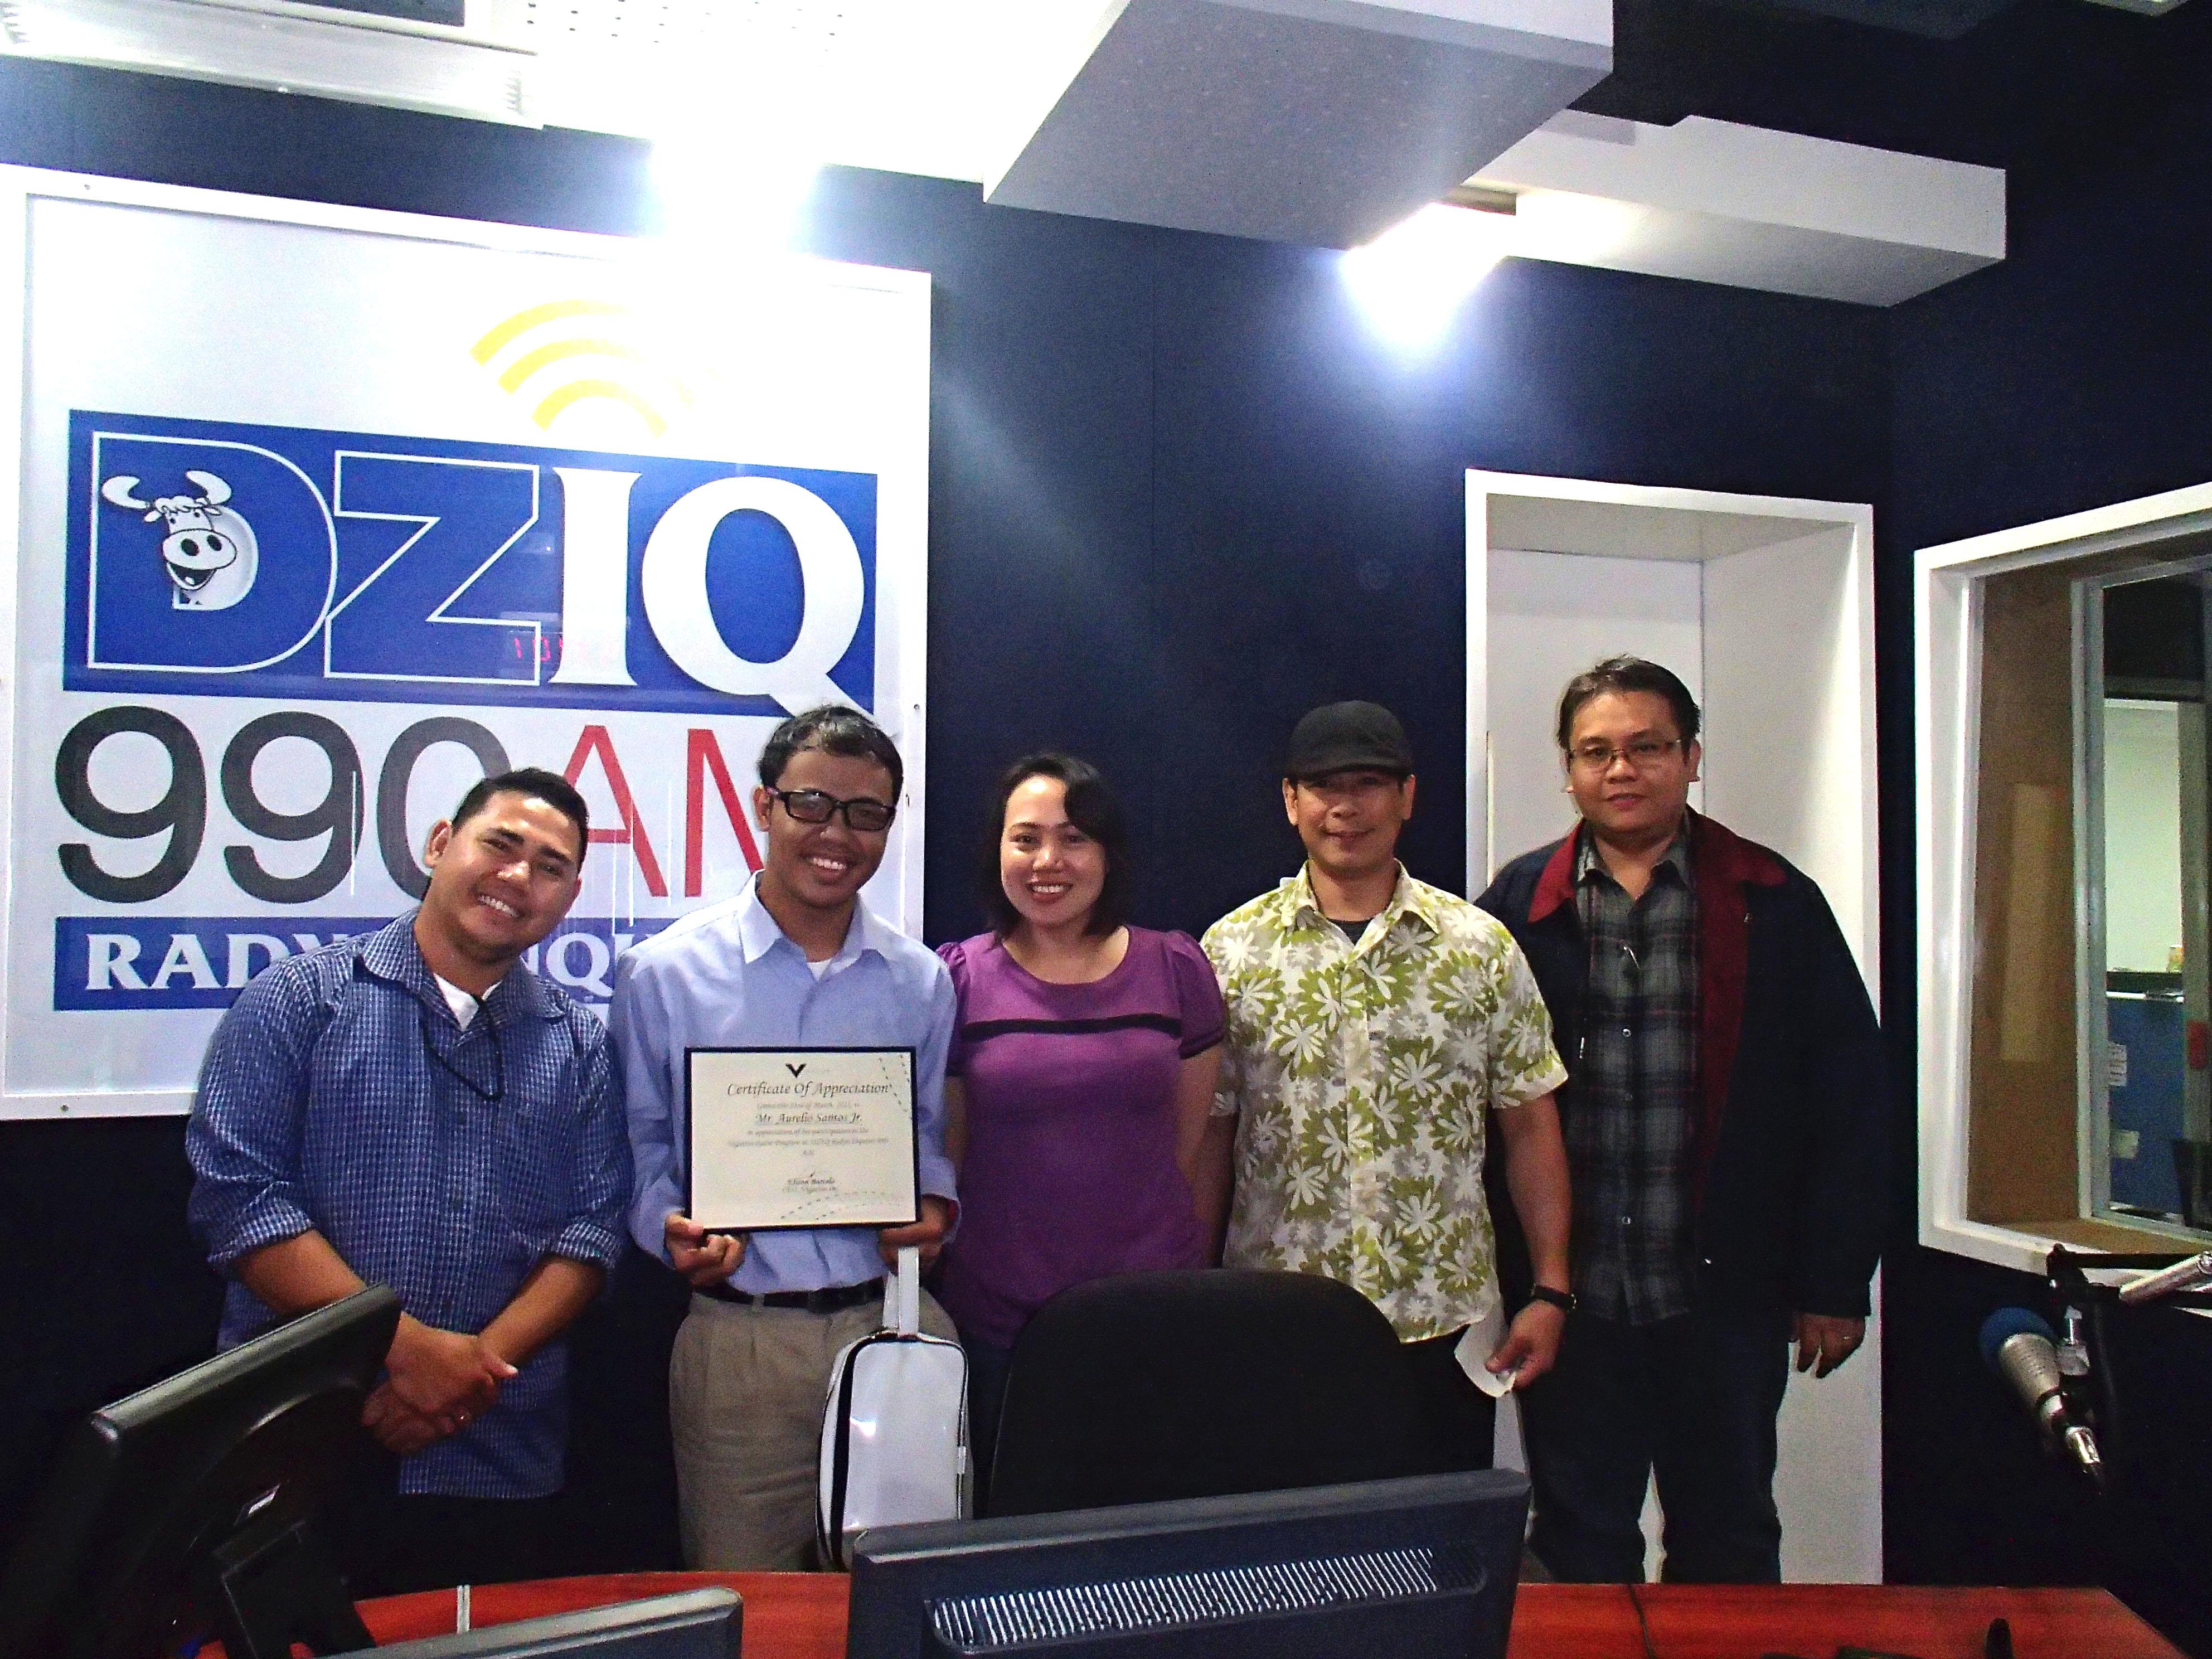 Vigattin Radio Congratulates the 2013 Graduates!